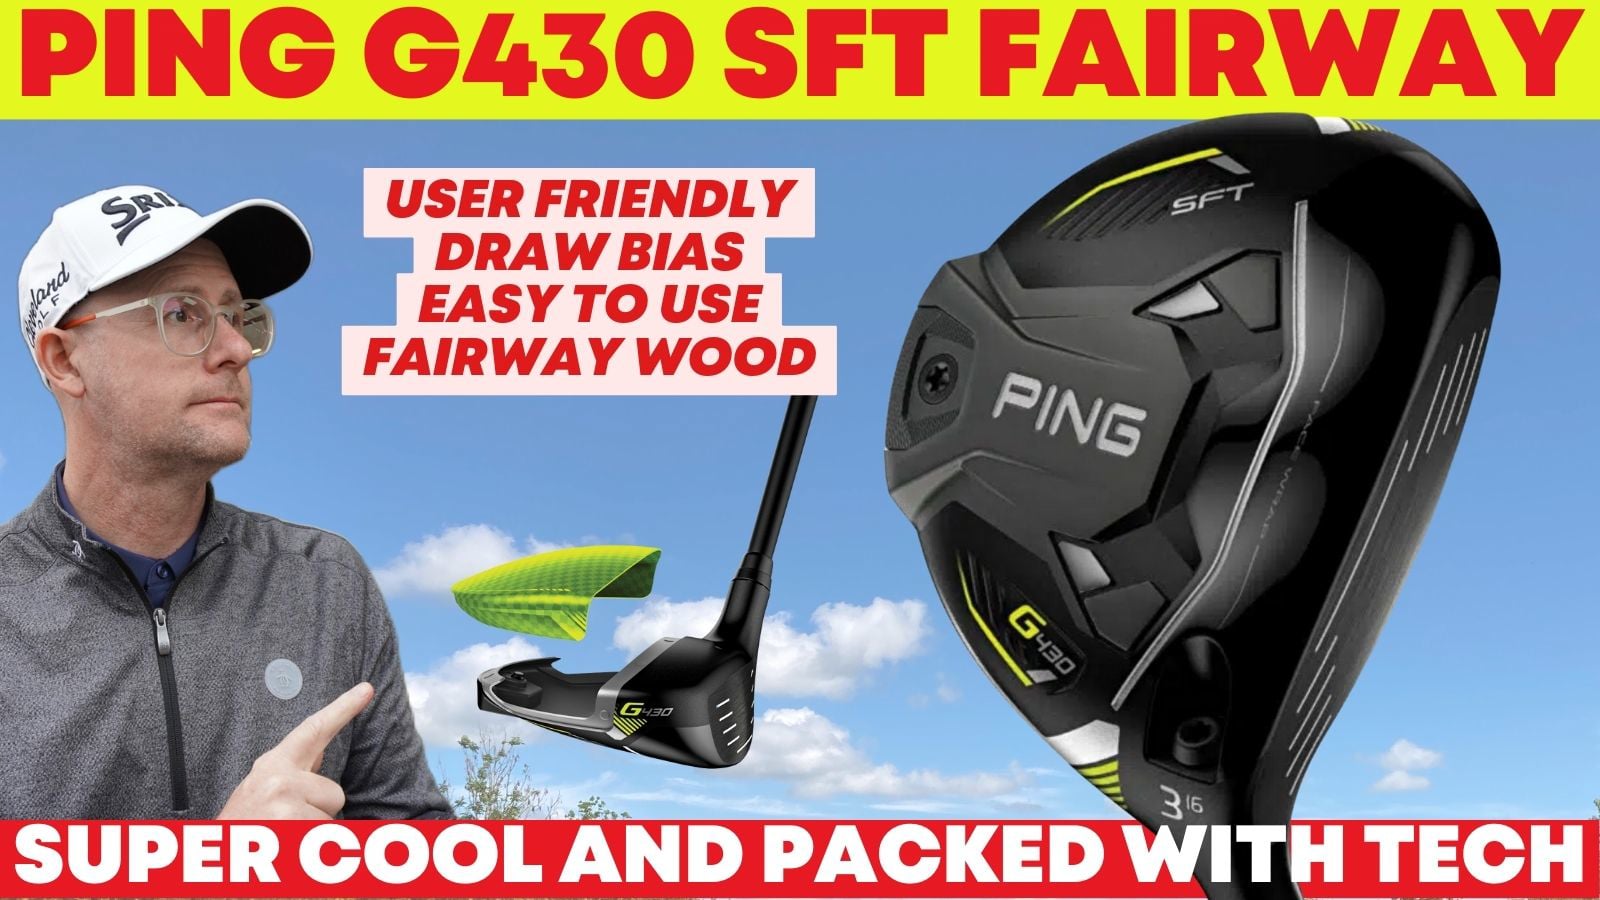 Ping G430 SFT Draw Bias Fairway Wood on Vimeo